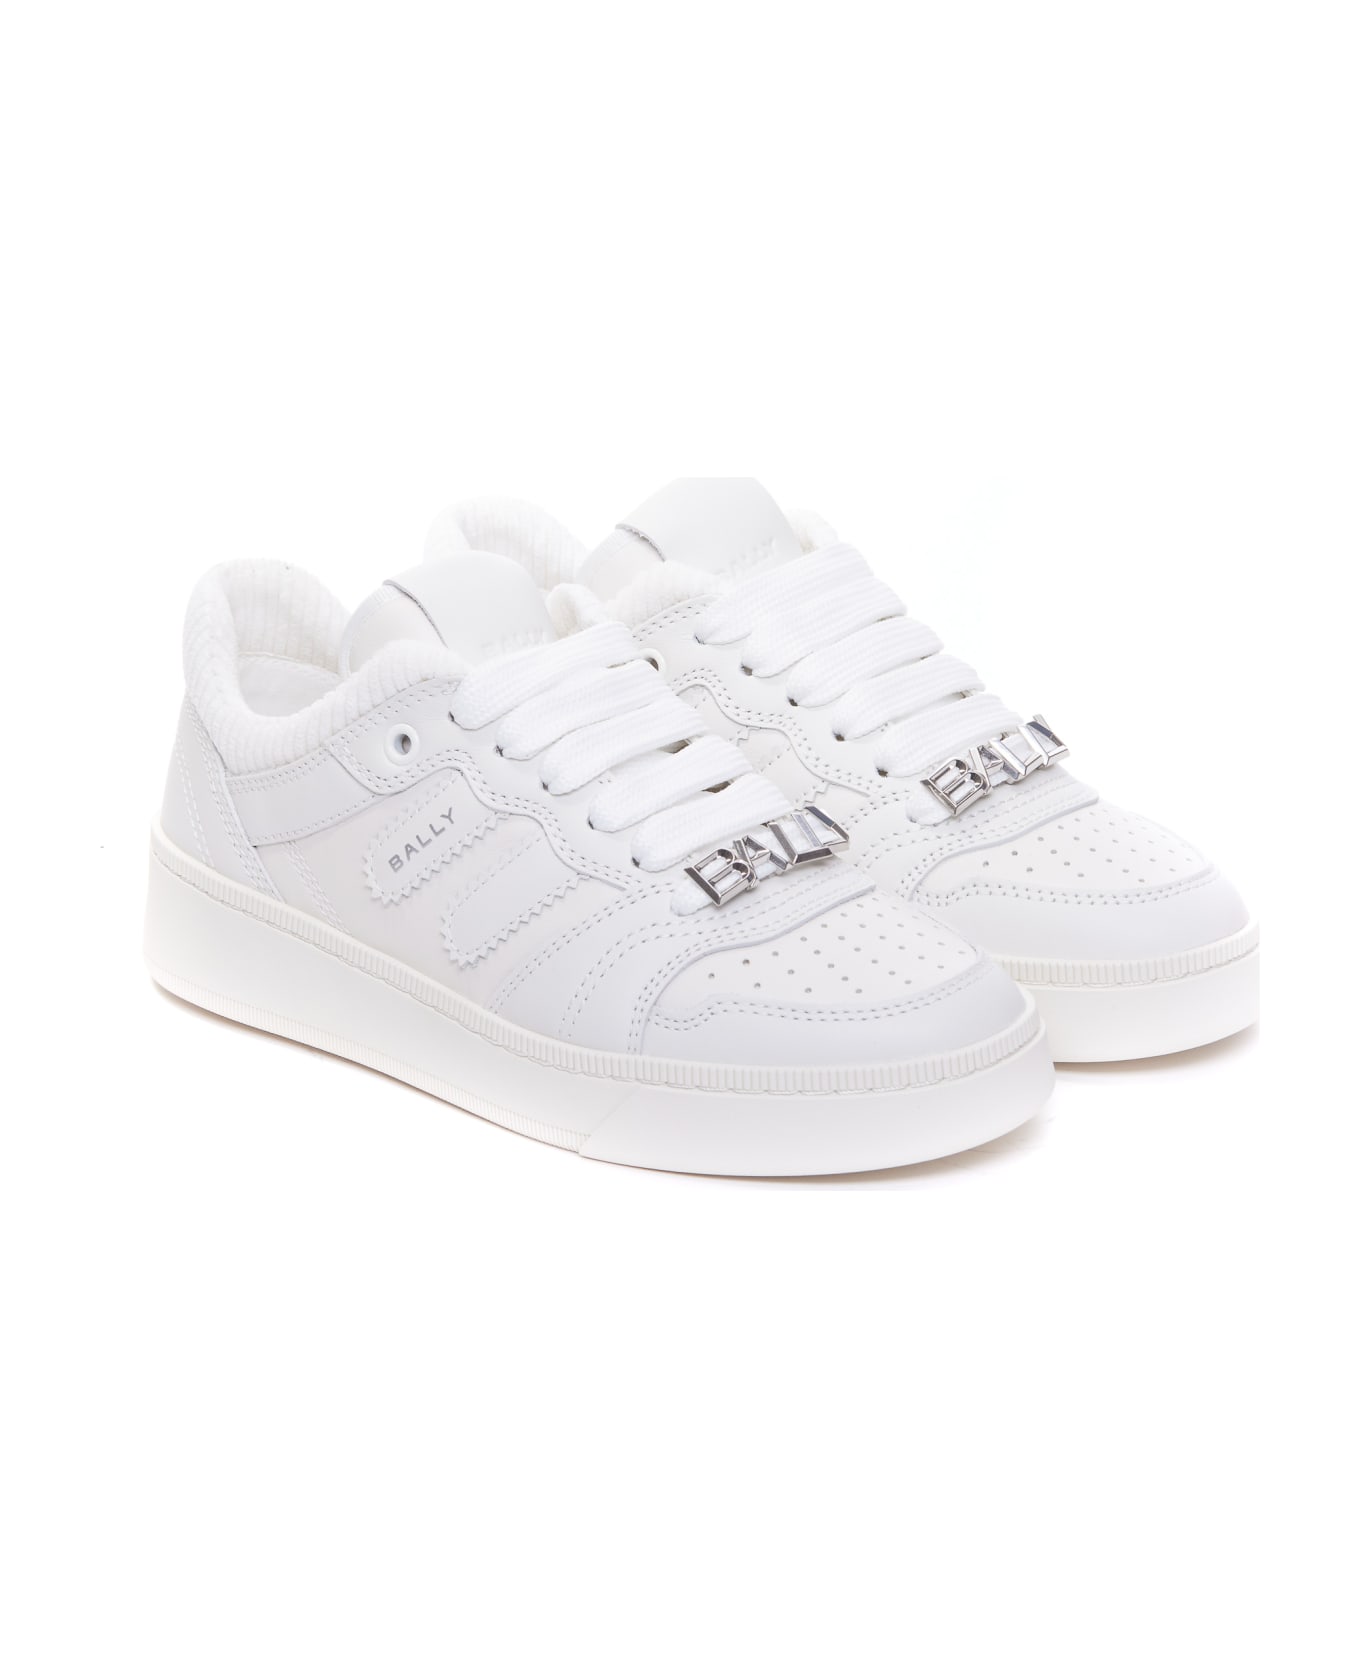 Bally Royalty Sneakers - White スニーカー